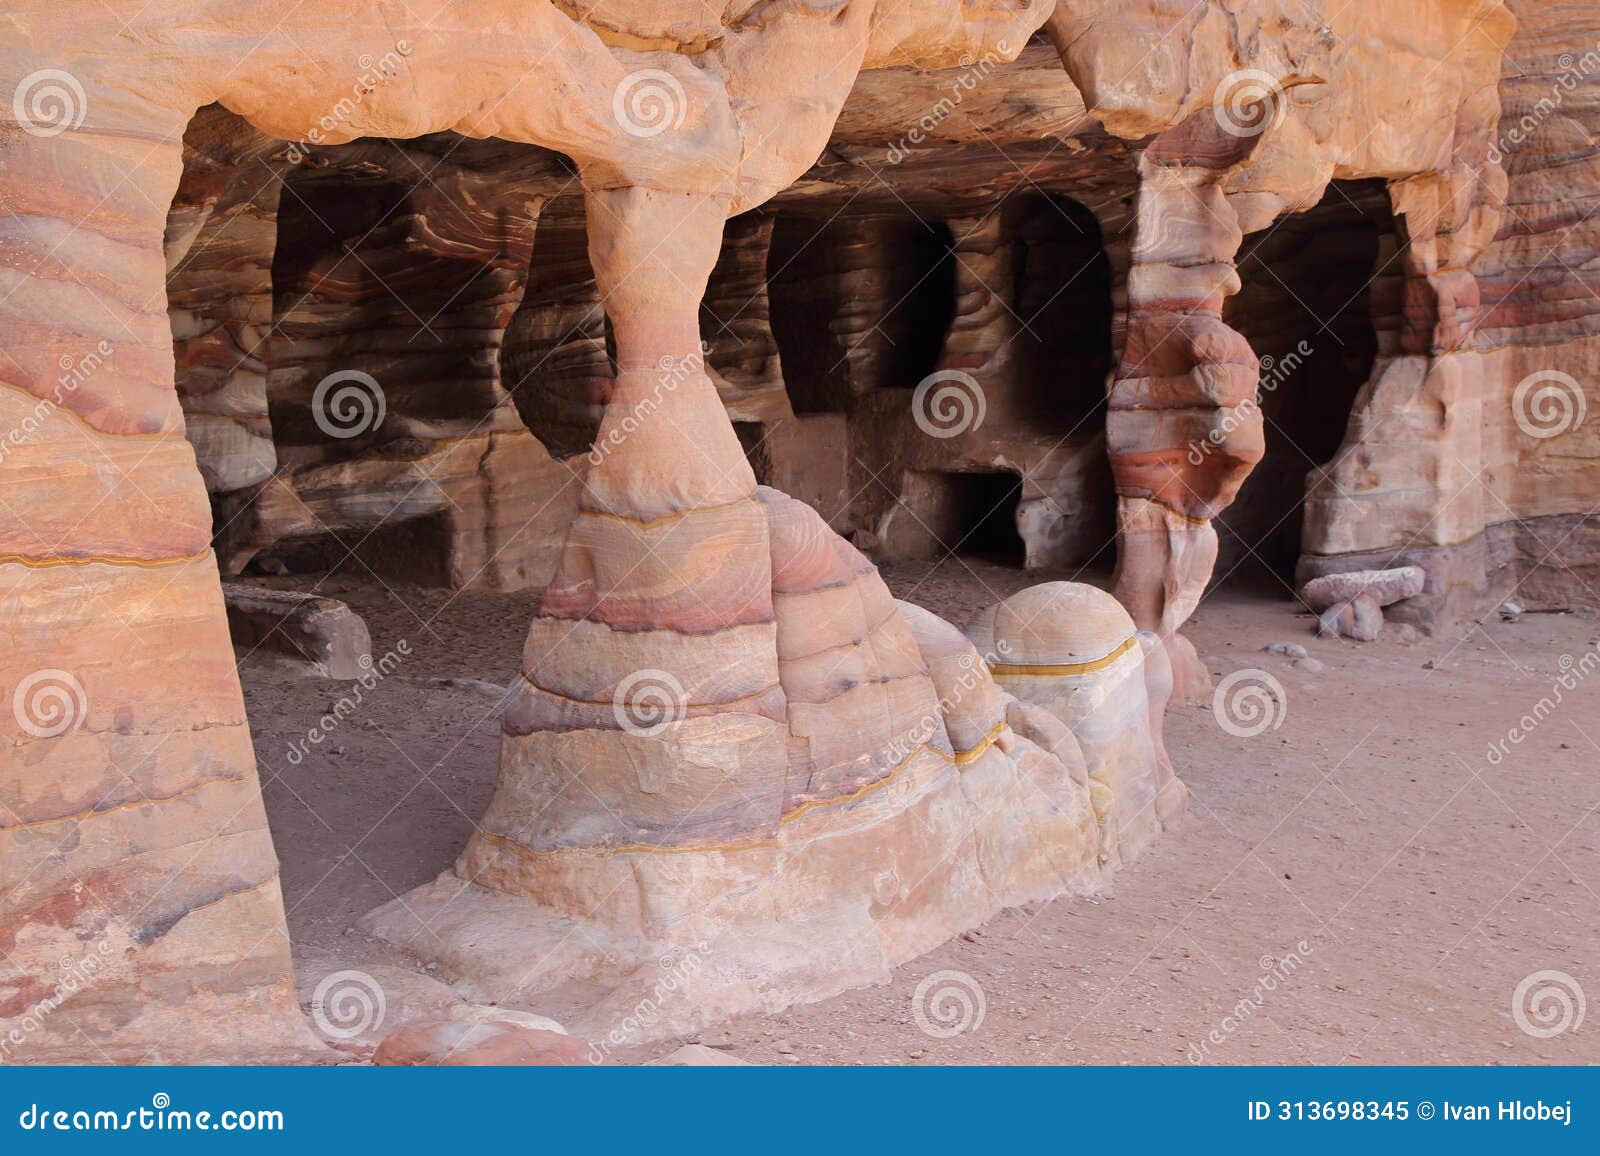 nabataean rock city of petra, dwelling interior, jordan